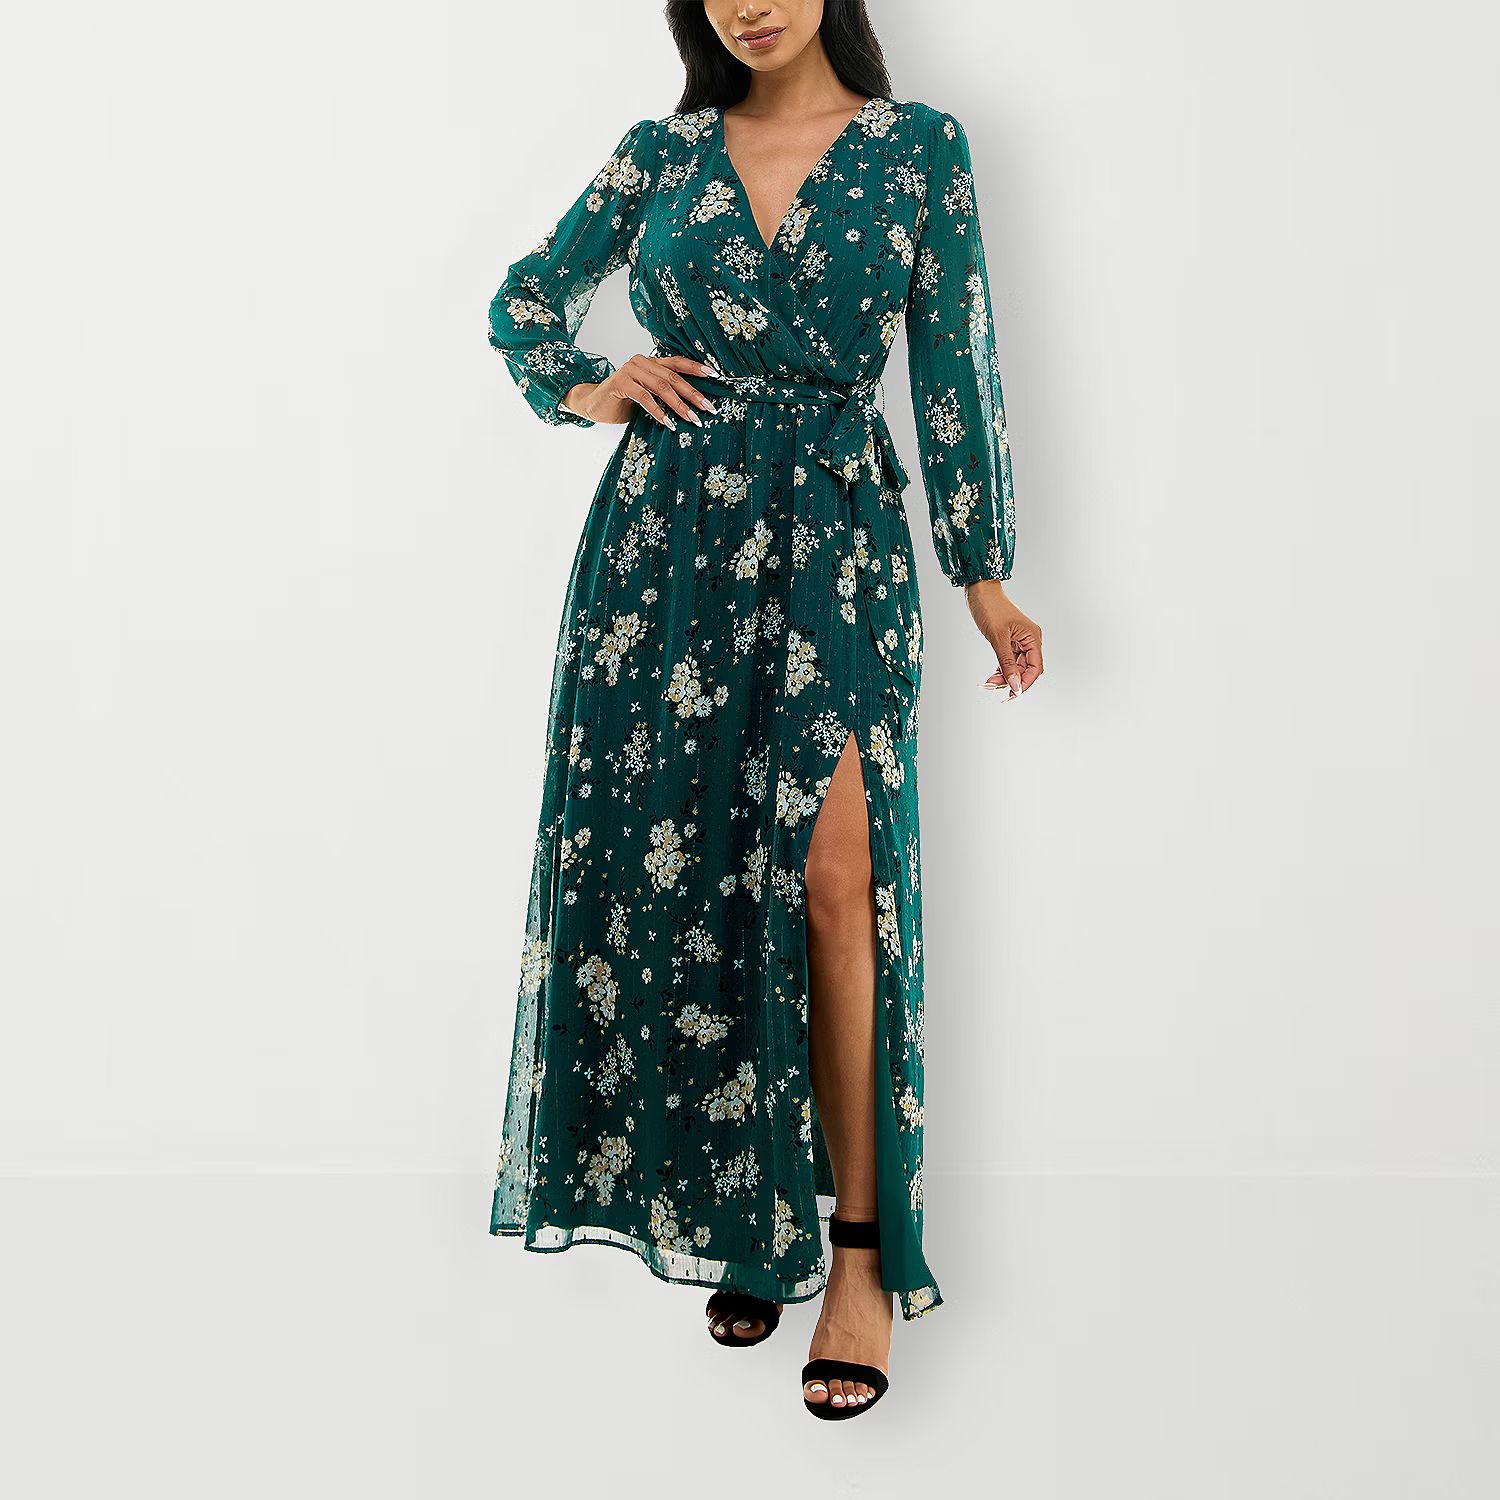 Premier Amour Floral Long Sleeve Floral Maxi Dress | JCPenney